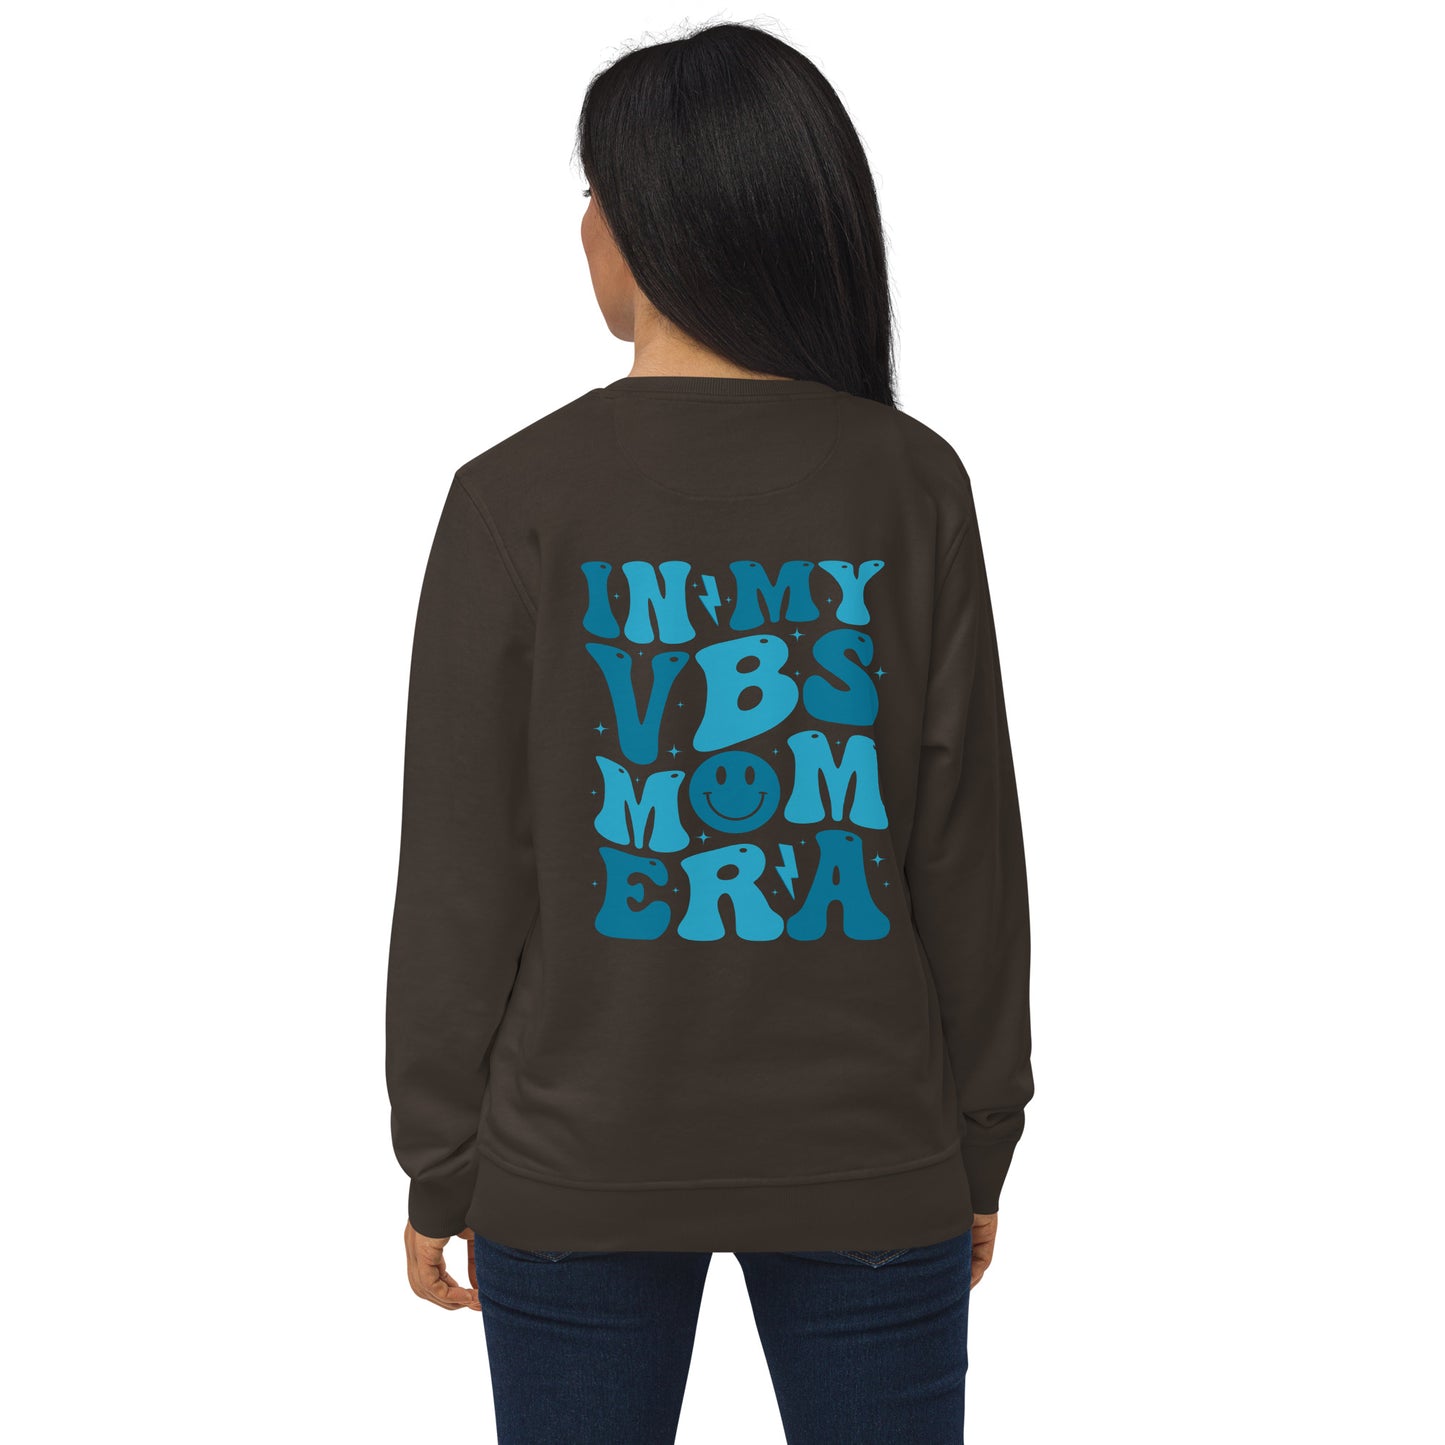 "In My VBS Mom Era" Unisex Organic Sweatshirt